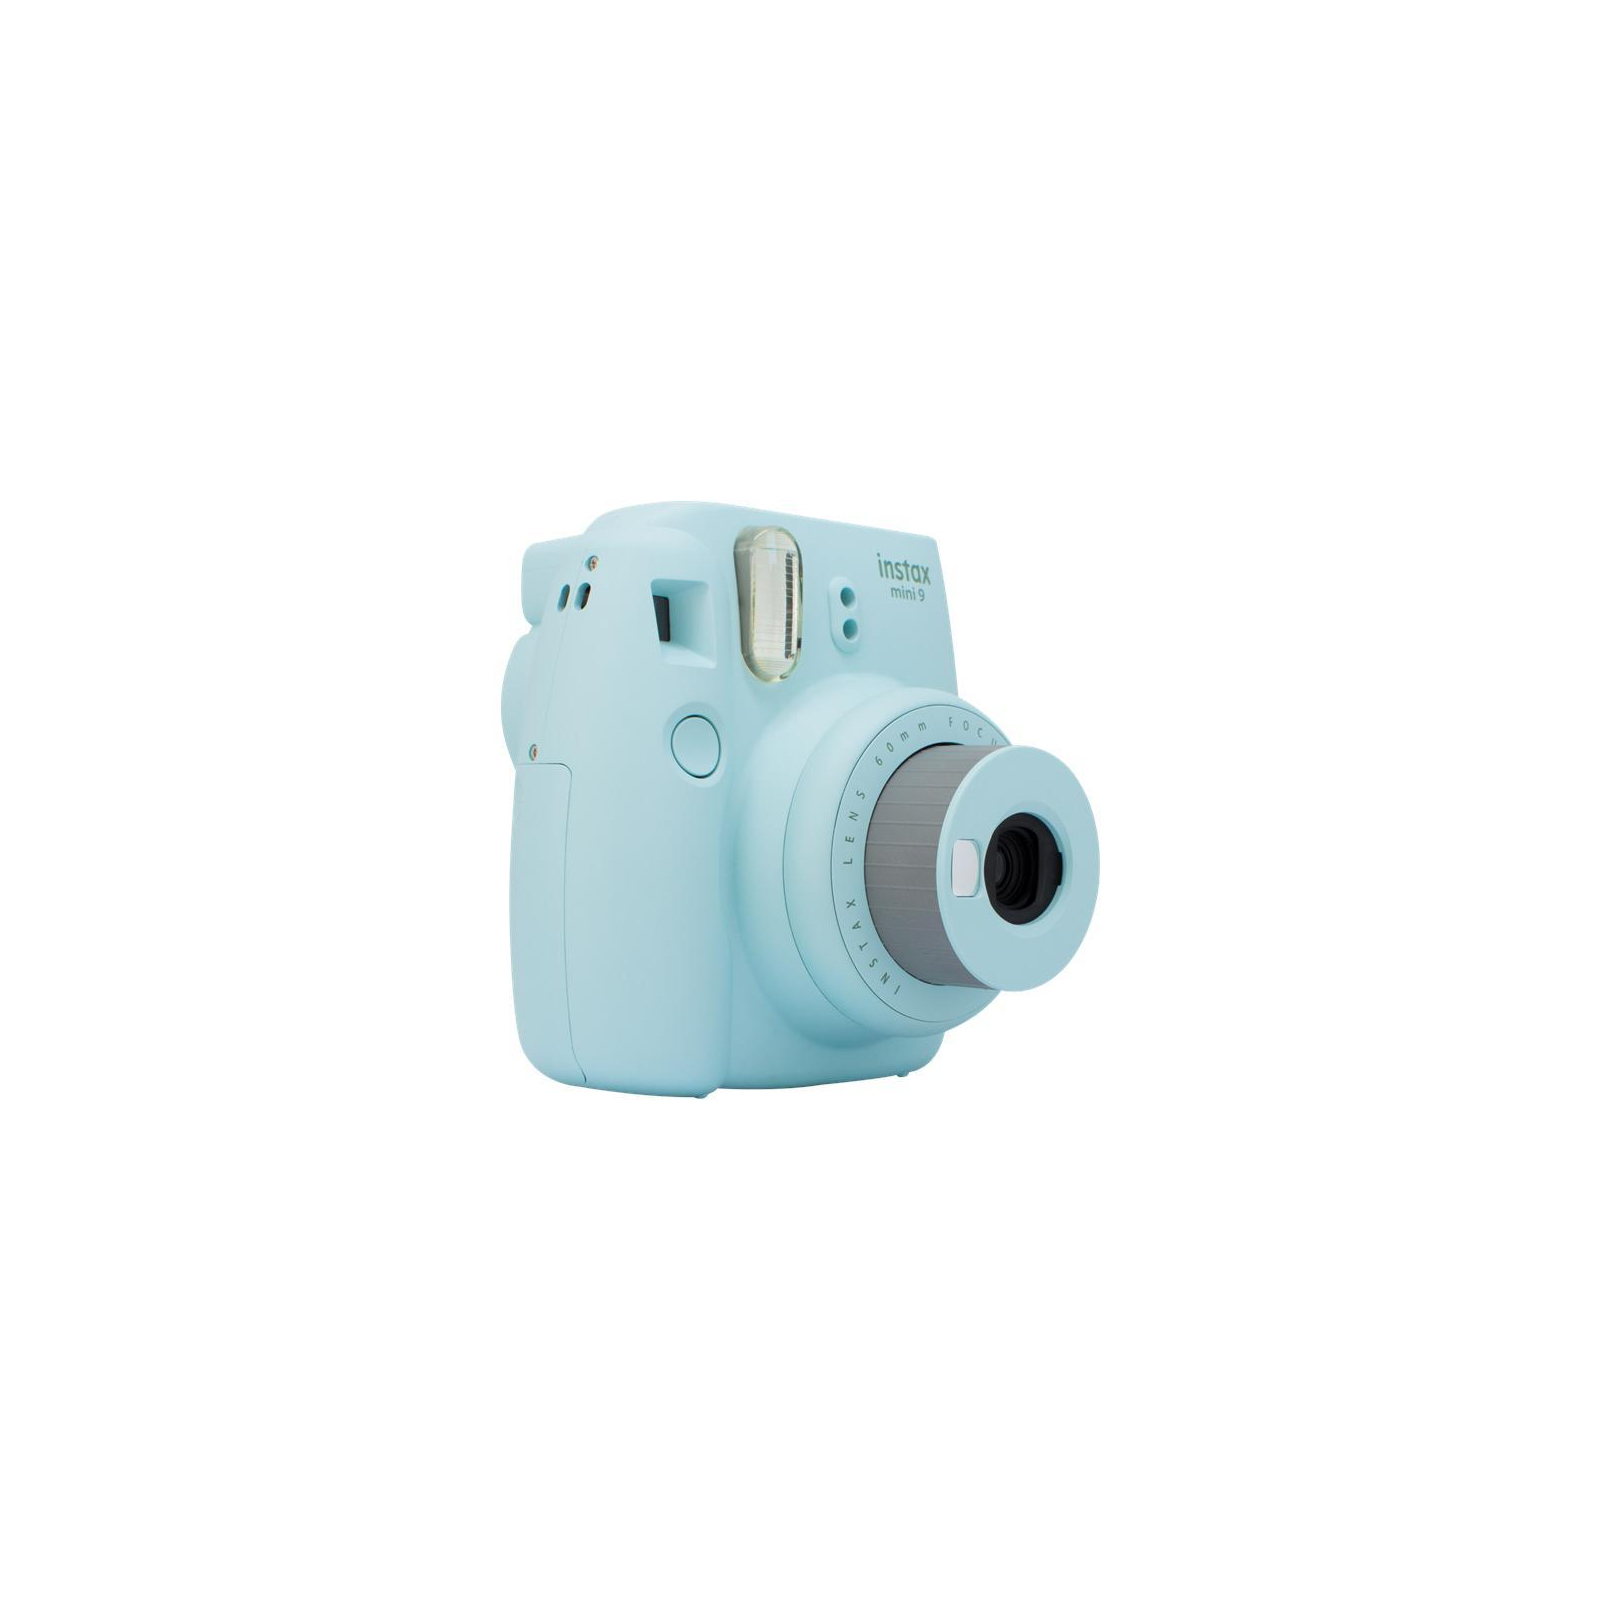 Камера миттєвого друку Fujifilm Instax Mini 9 CAMERA SMO WHITE TH EX D (16550679) зображення 3